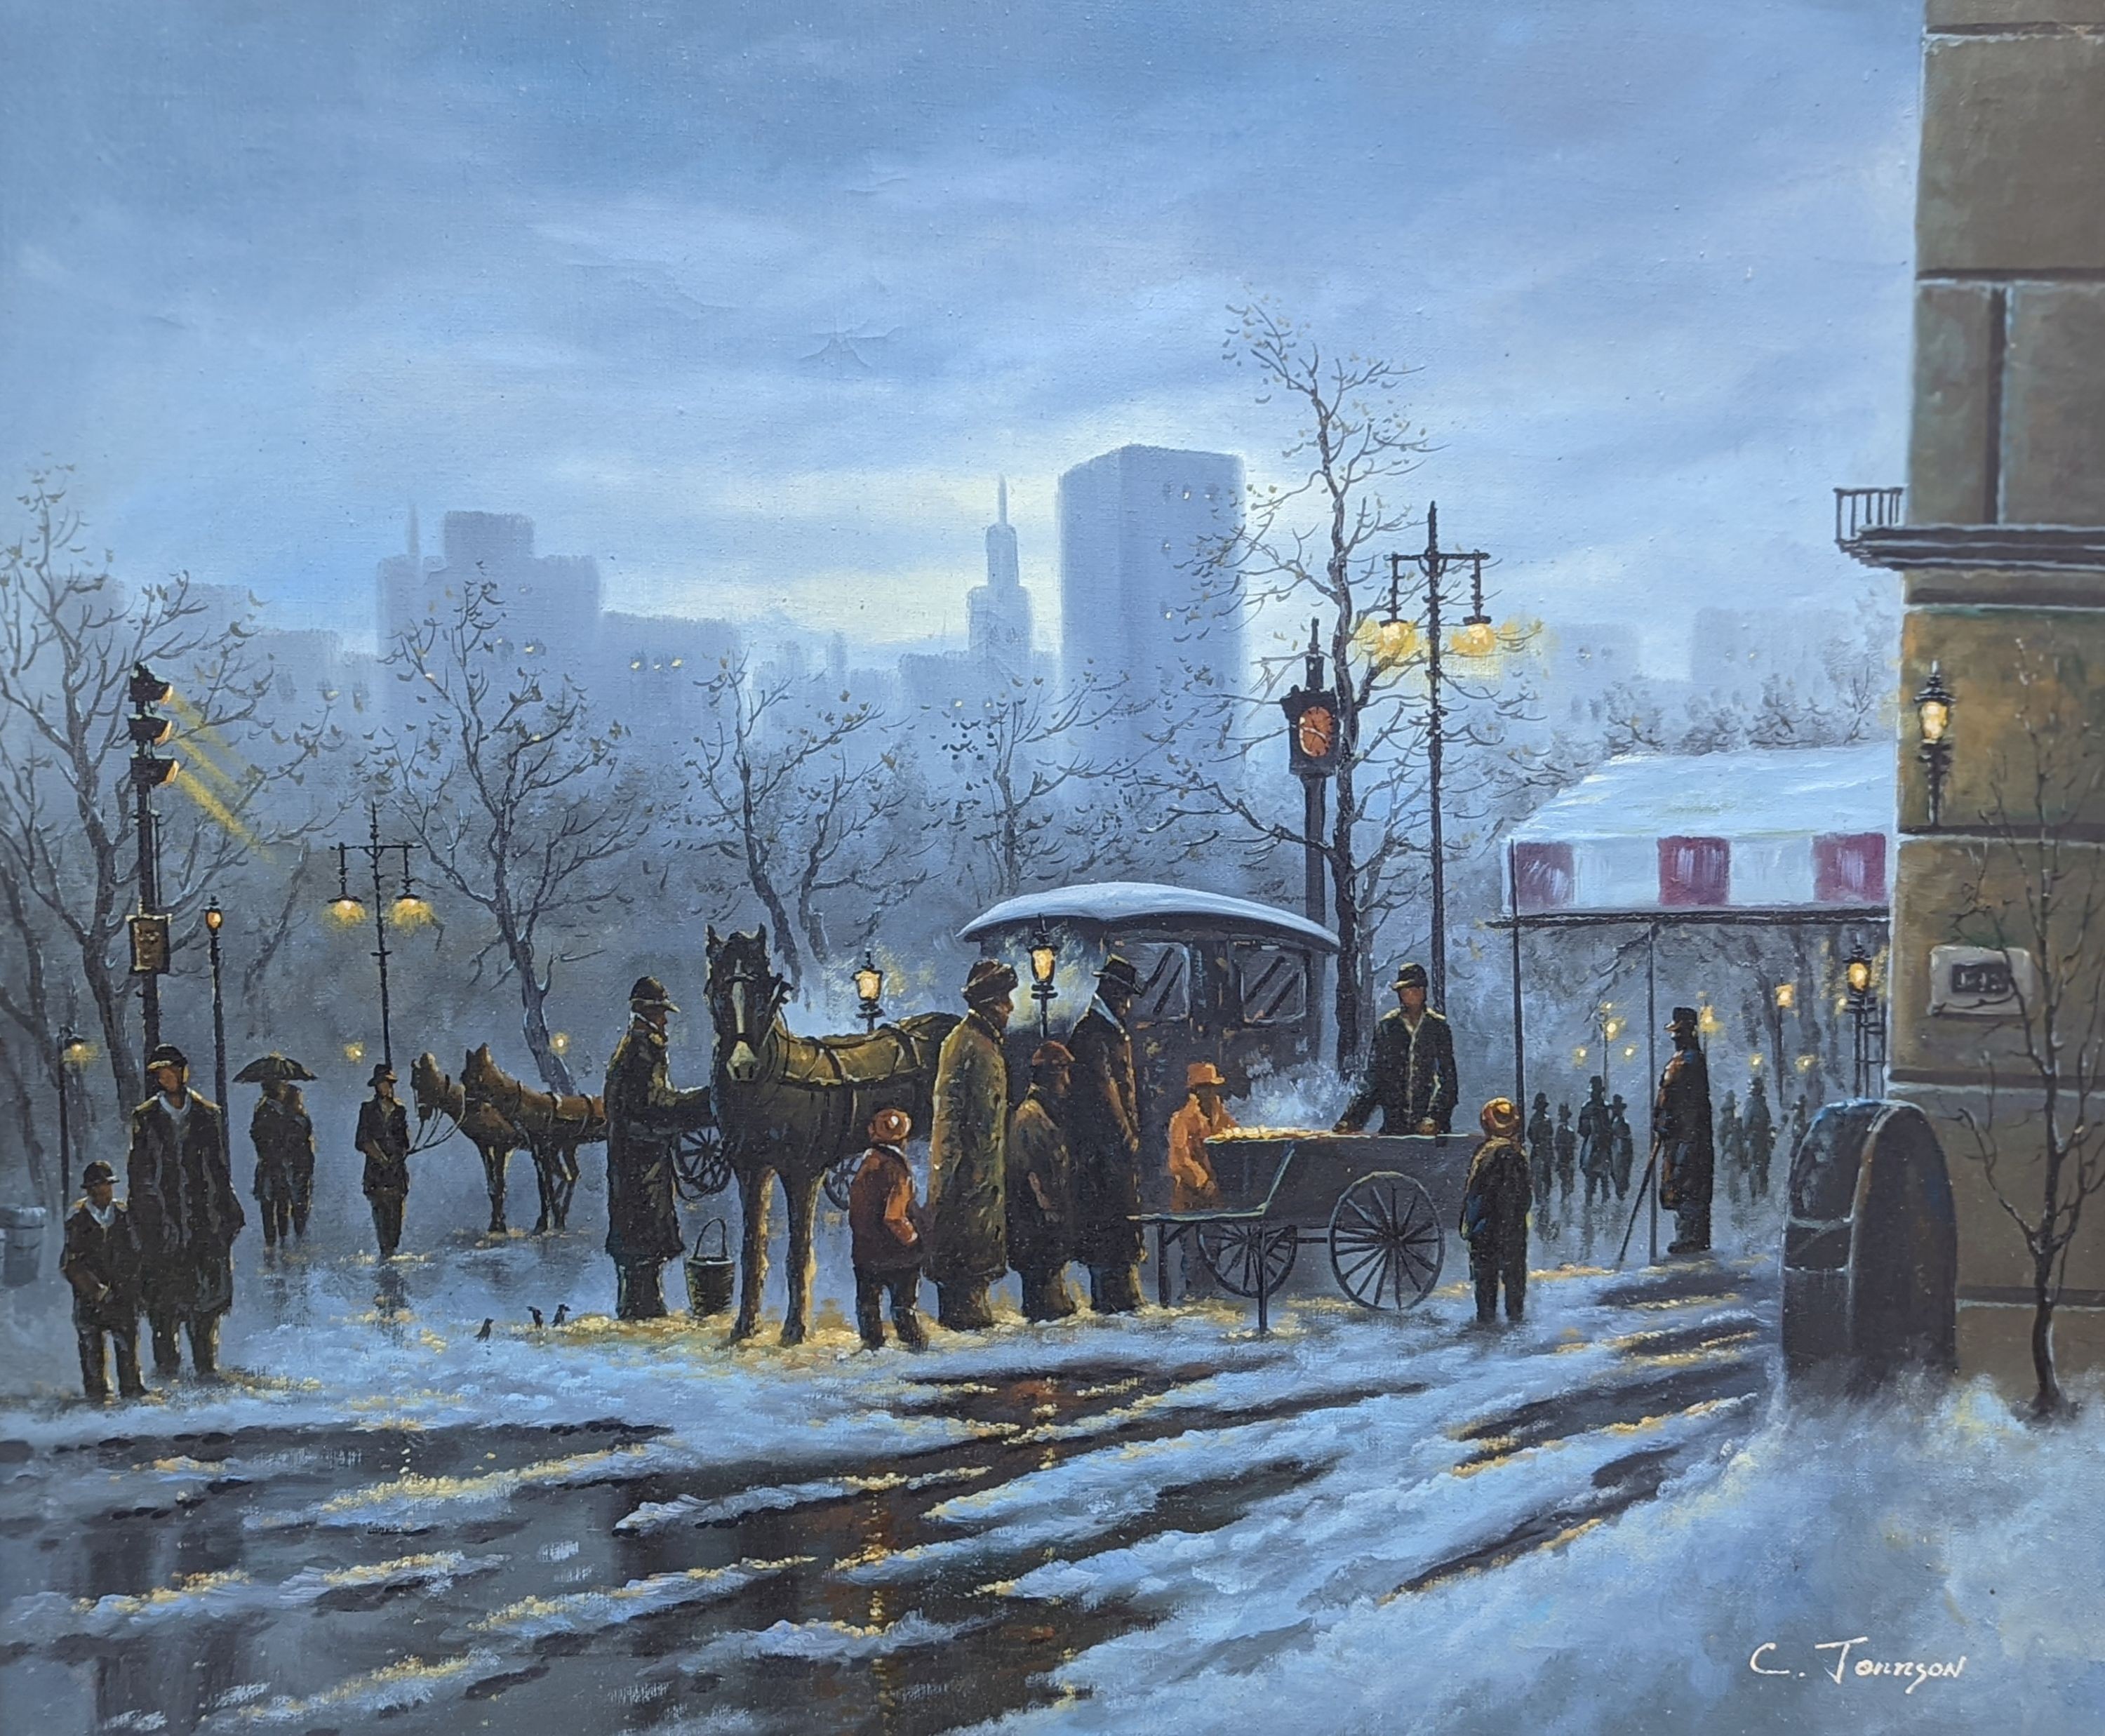 C. Jonnson, oil on canvas, Street market in winter, signed, 50 x 60cm